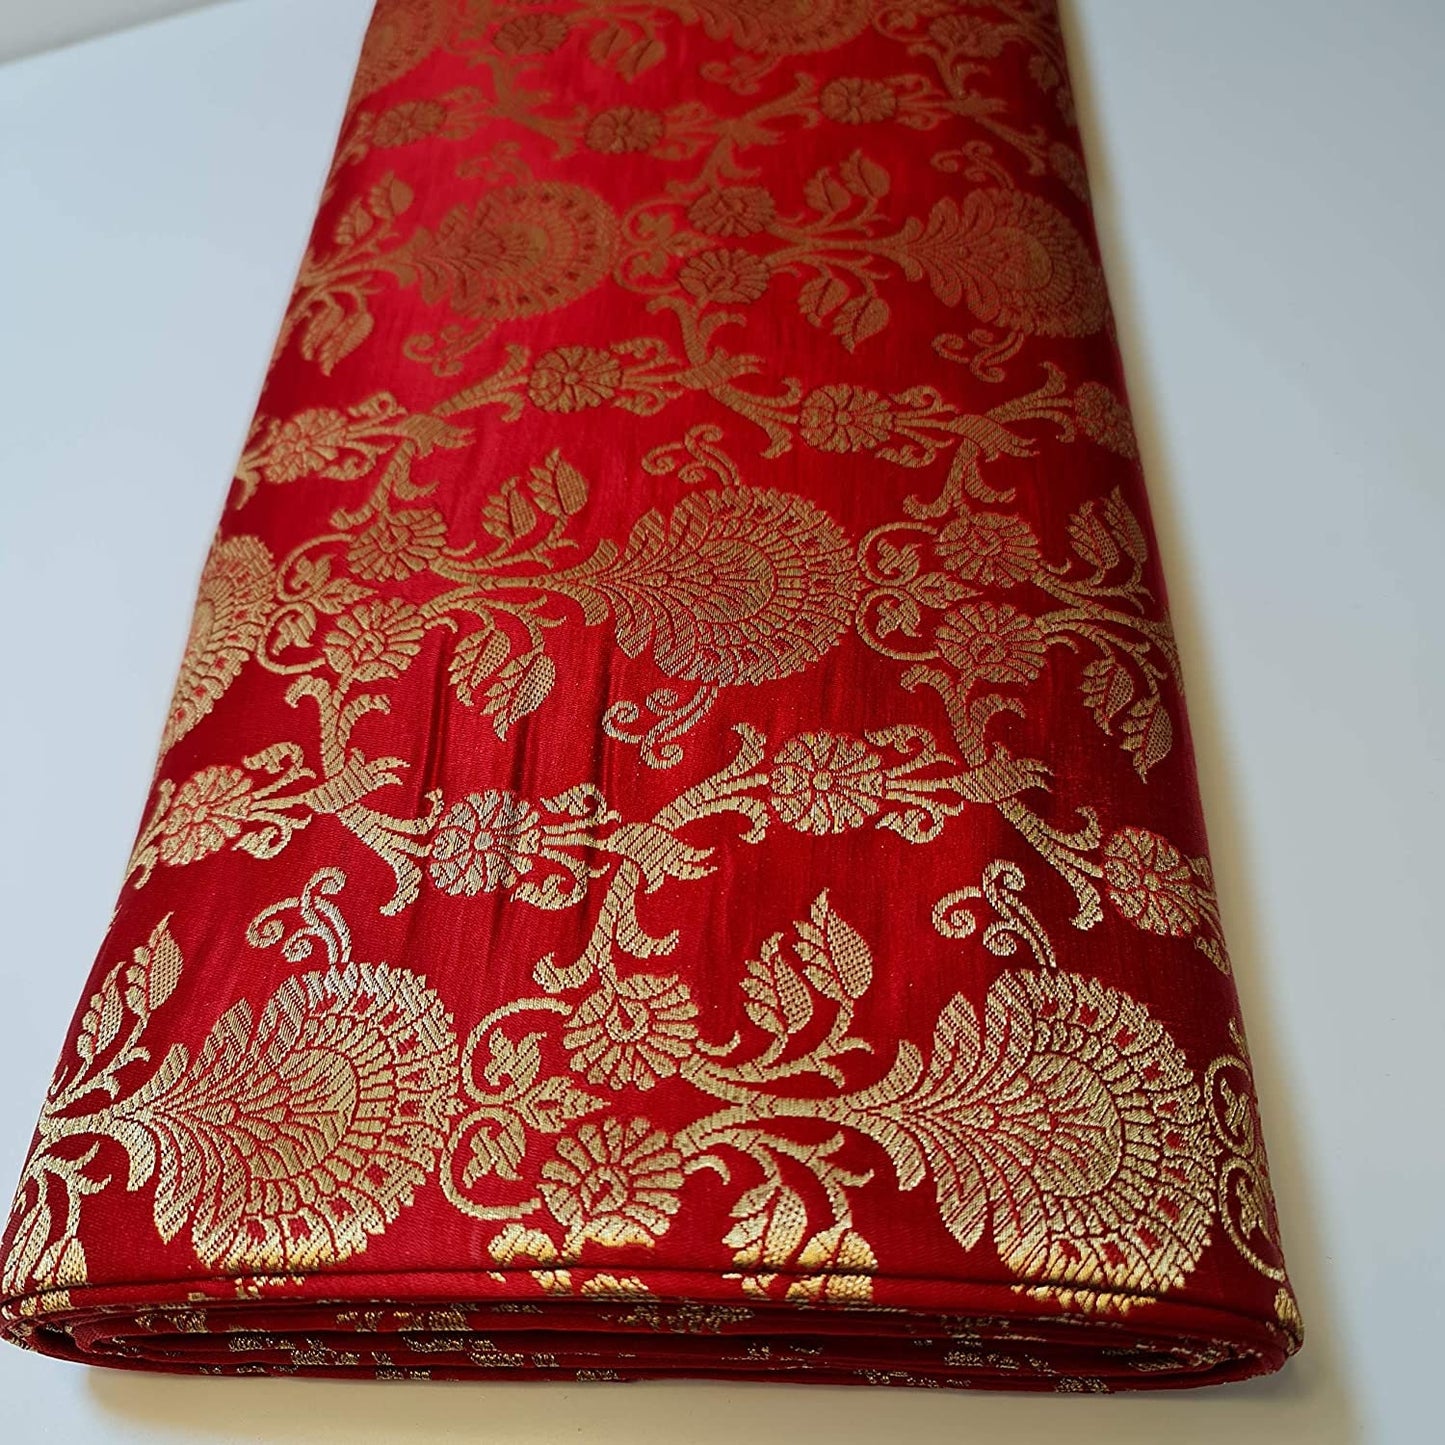 Ornamental Floral Gold Metallic Print Indian Banarasi Brocade Fabric (Red)